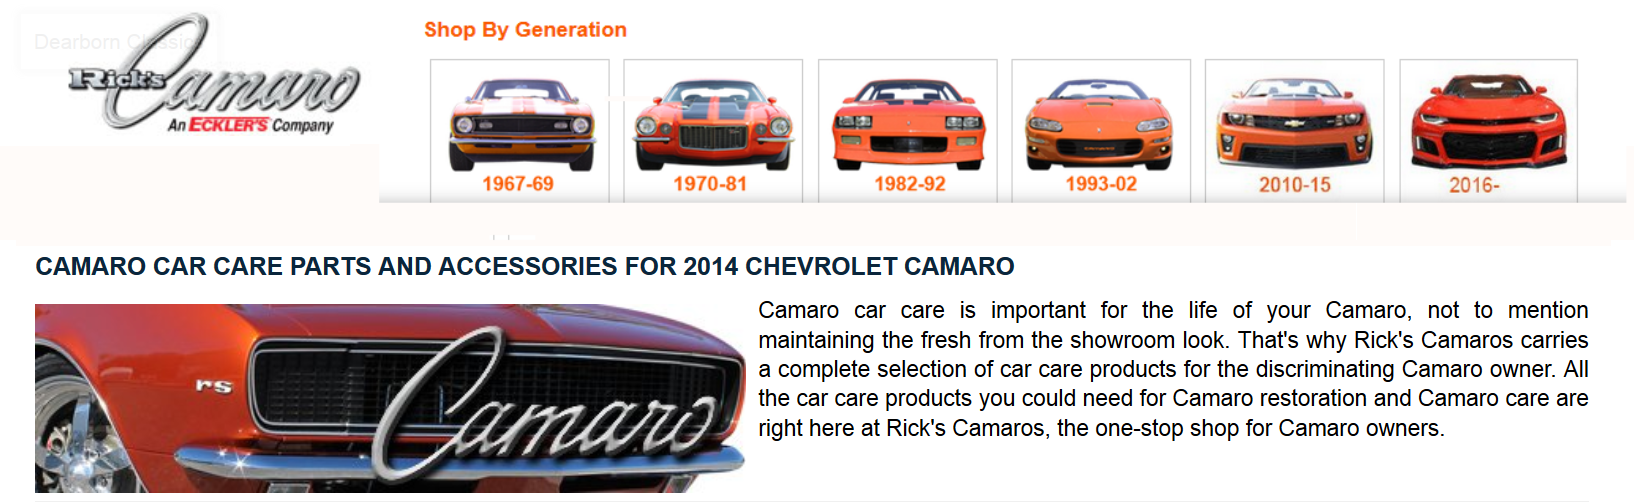 Camaro custom car kits discount pricing